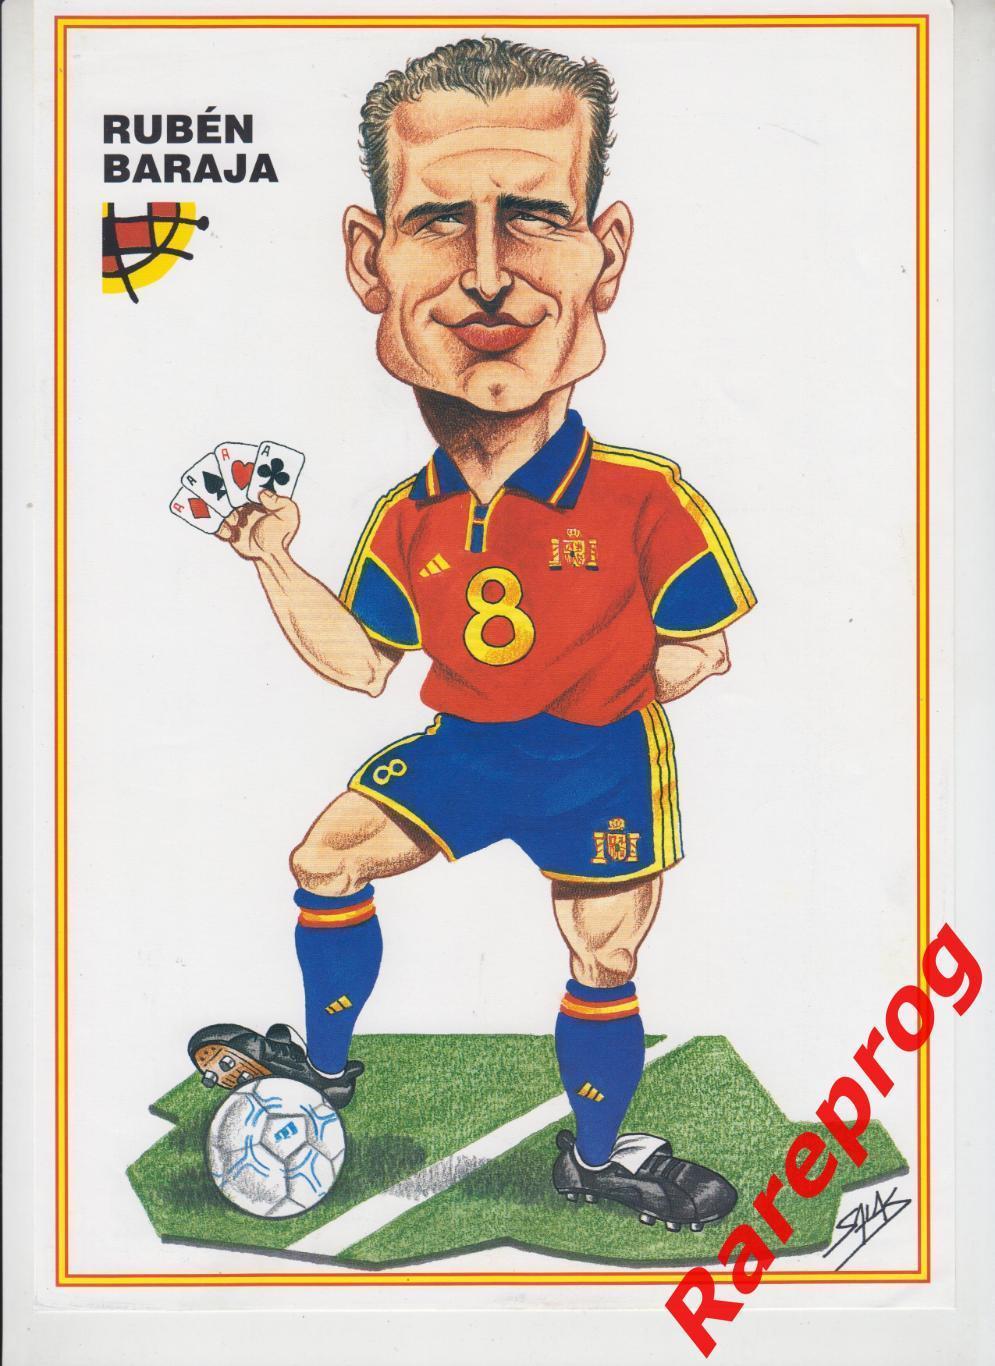 журнал Футбол RFEF Испания № 36 июнь 2001 - 25 лет кубку Испании 1